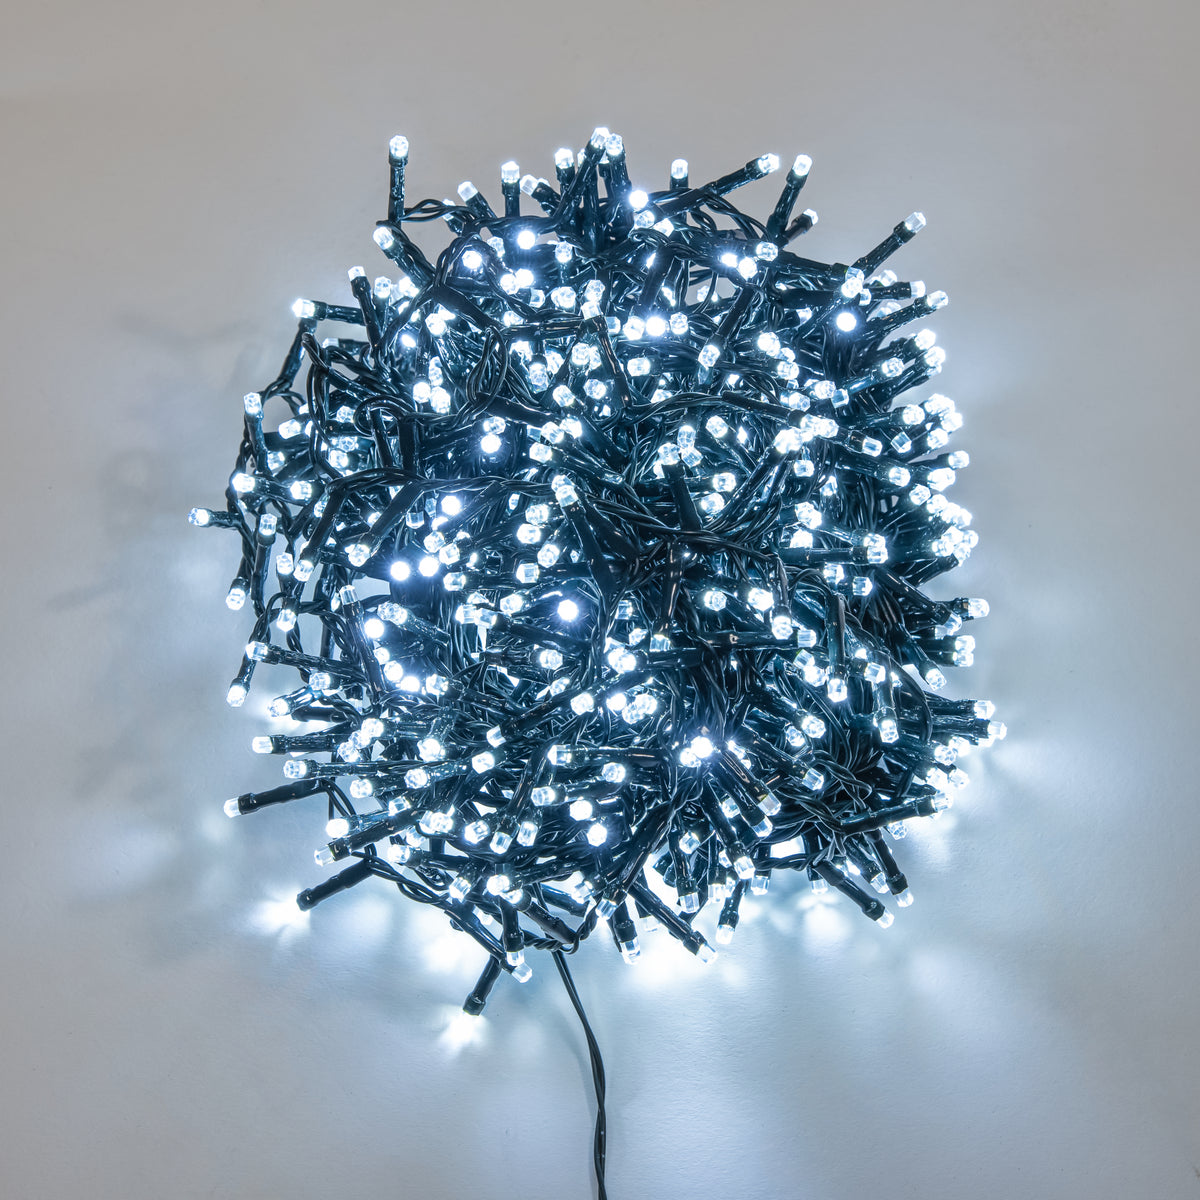 White LED Multi-Function Christmas Compact Lights - 750, 1500, 2000, 3000